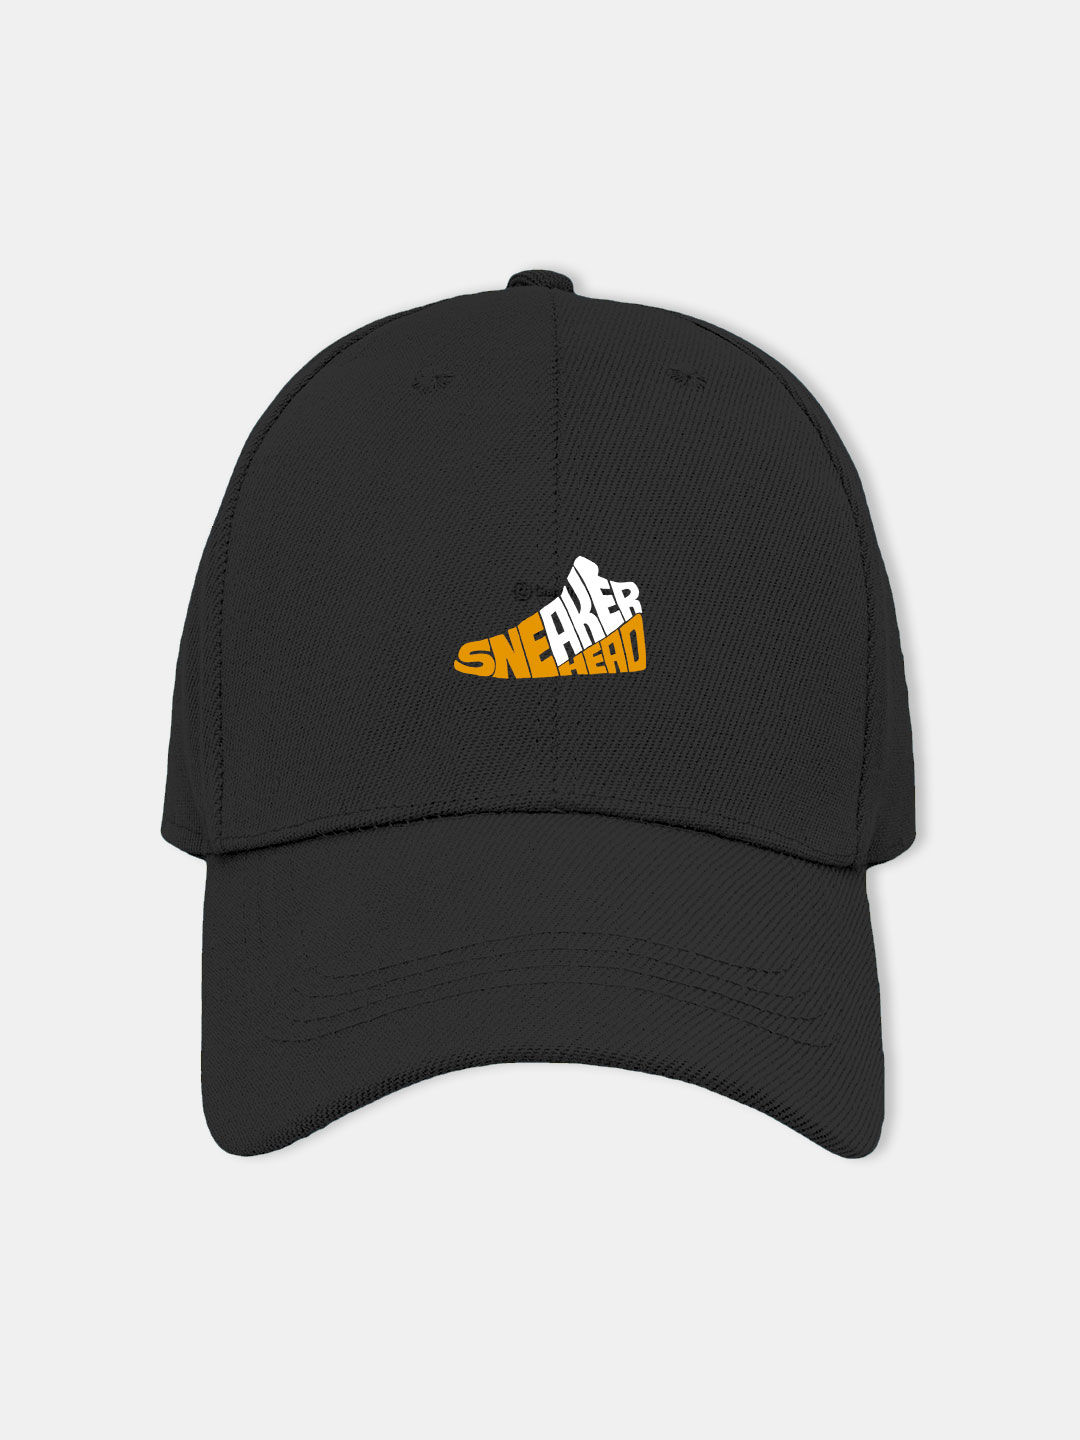 Buy Sneakerhead Taxi - Cap Black Cap Online